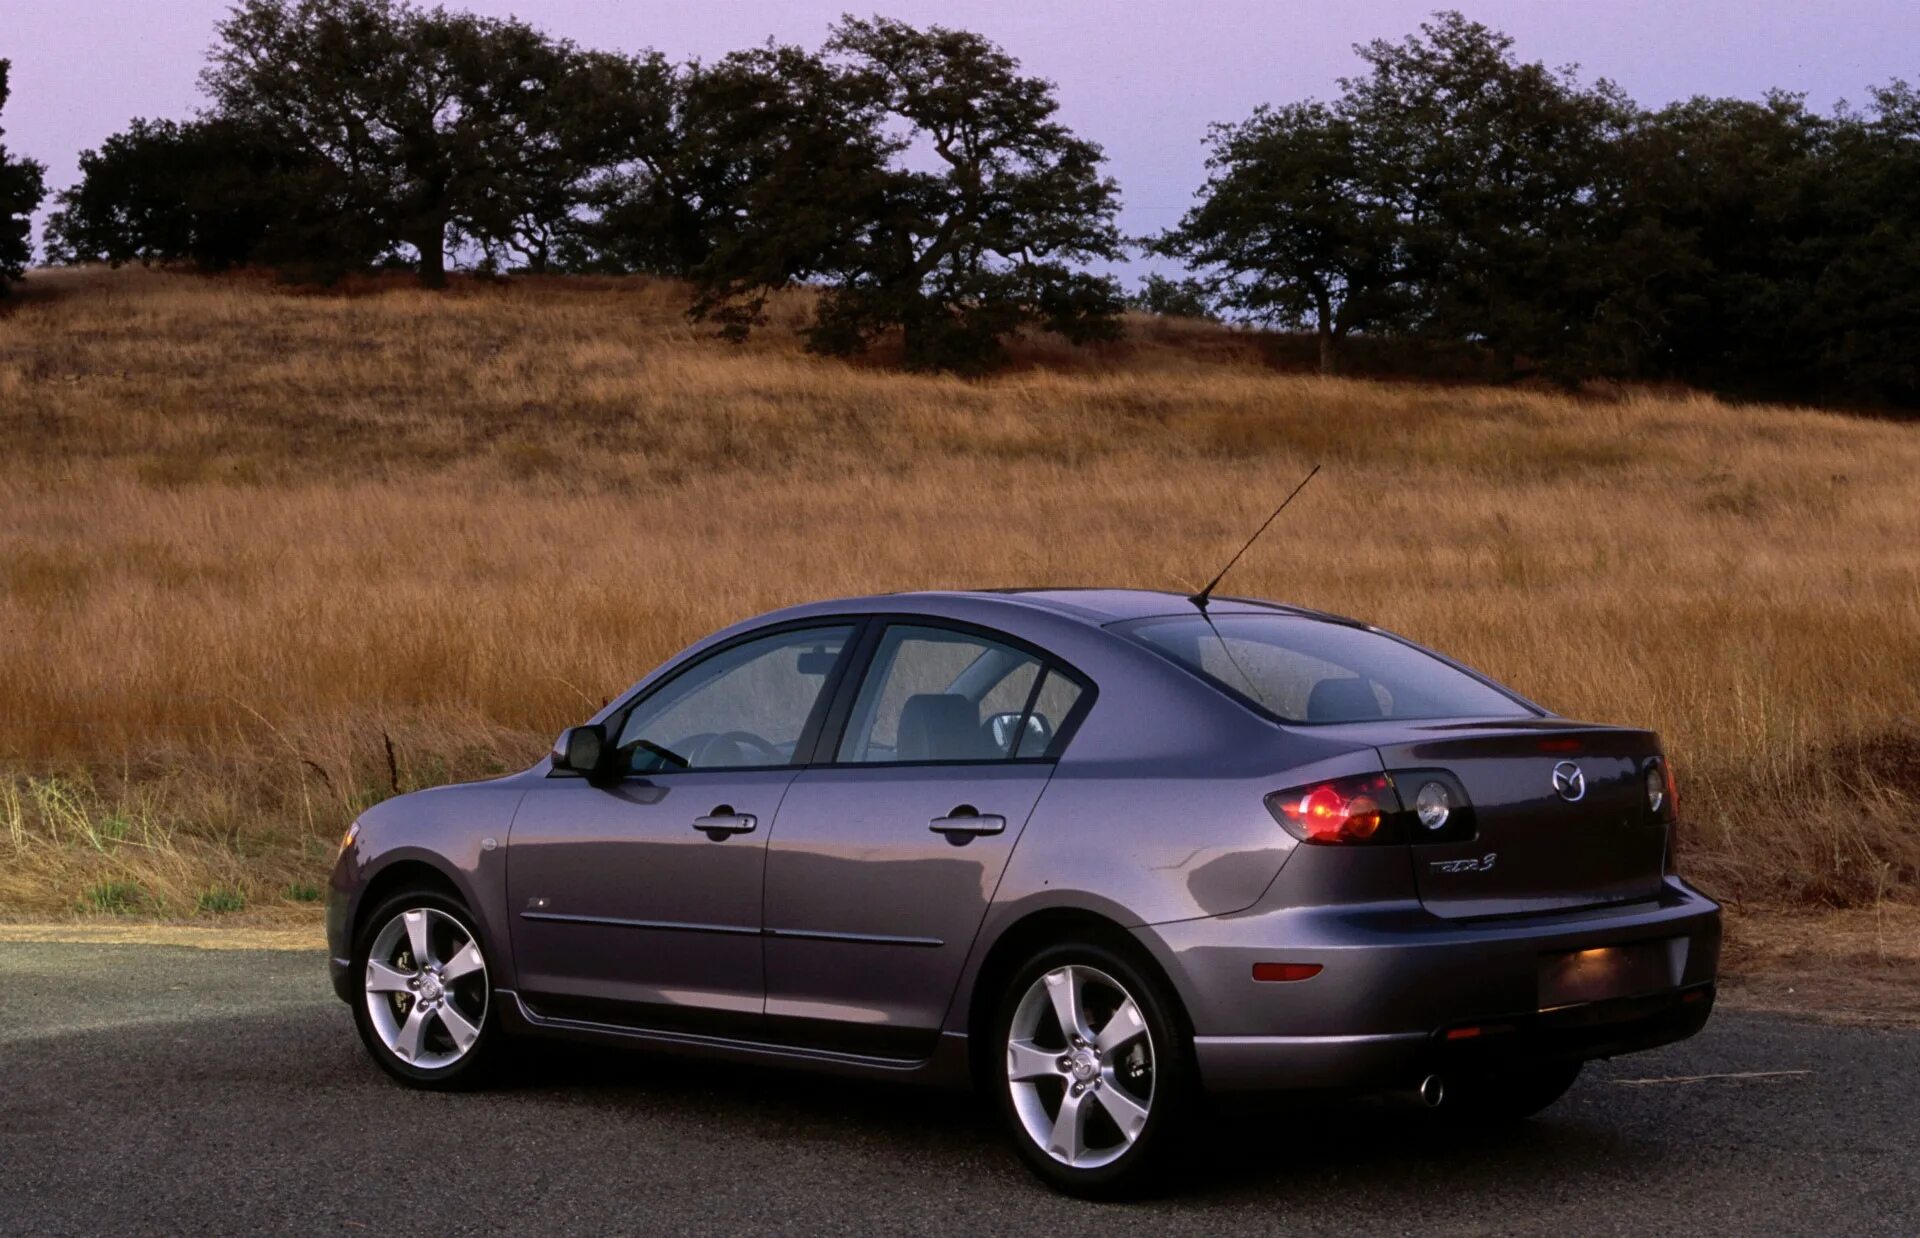 Mazda 3 2005. Мазда 3 седан 2004. Мазда 3 седан 2005. Mazda 3 BK седан 2005. Мазда 3 2003